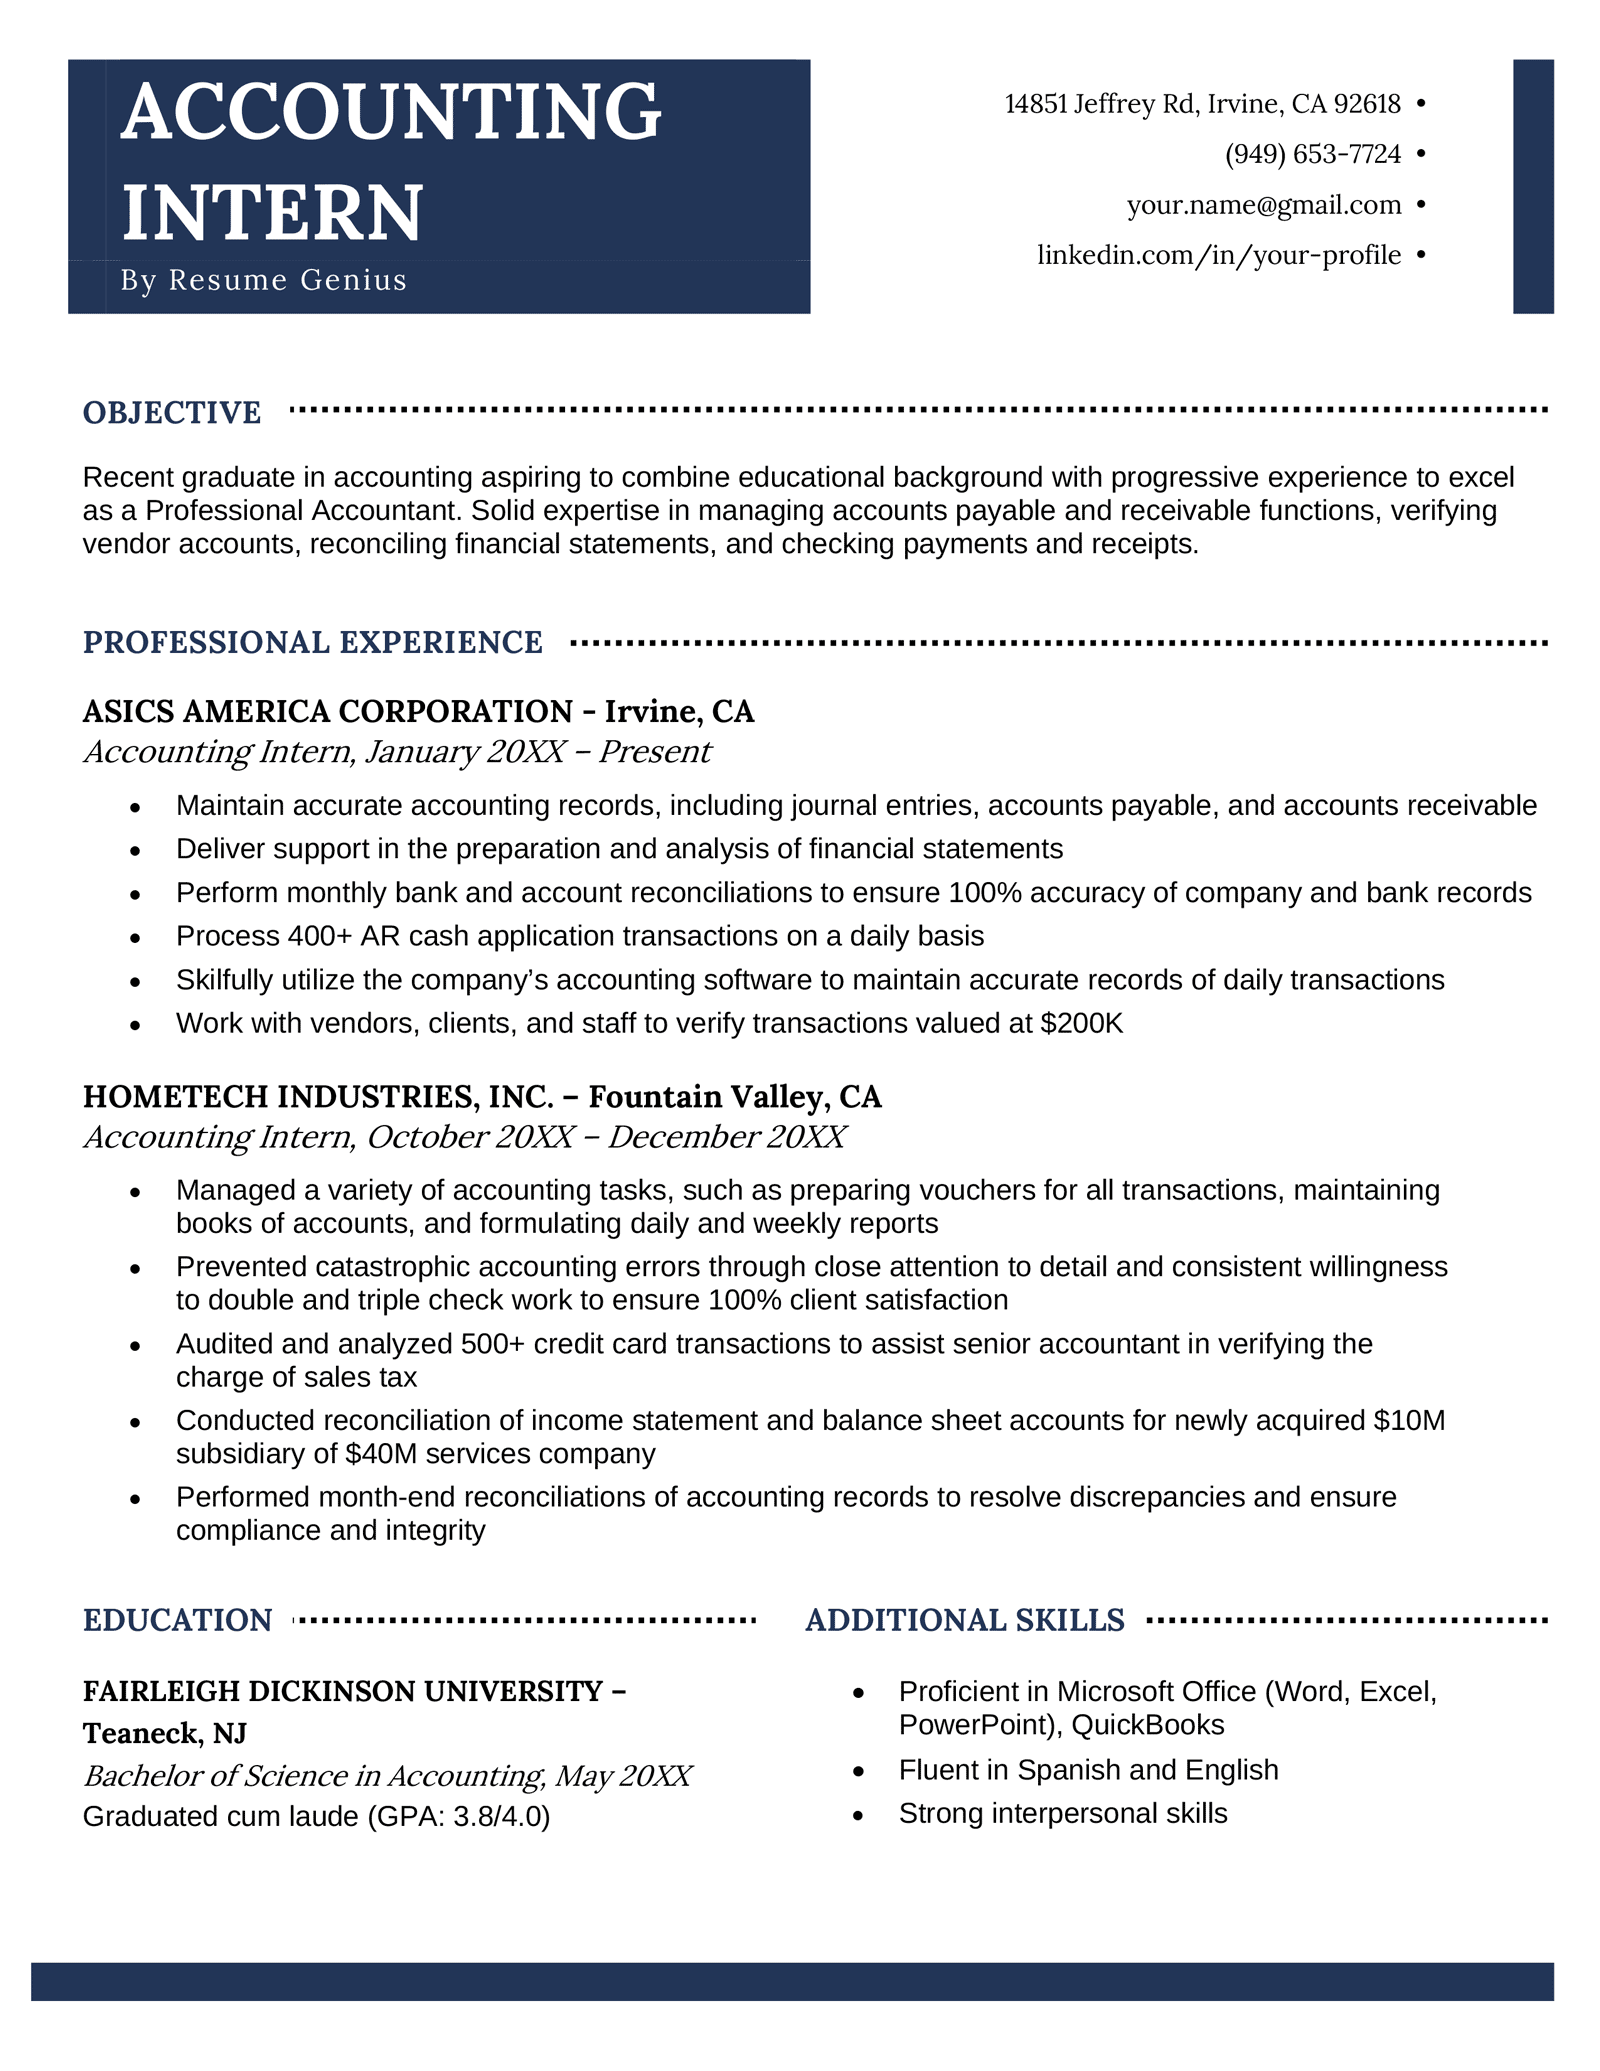 Sample of an accounting internship resume.